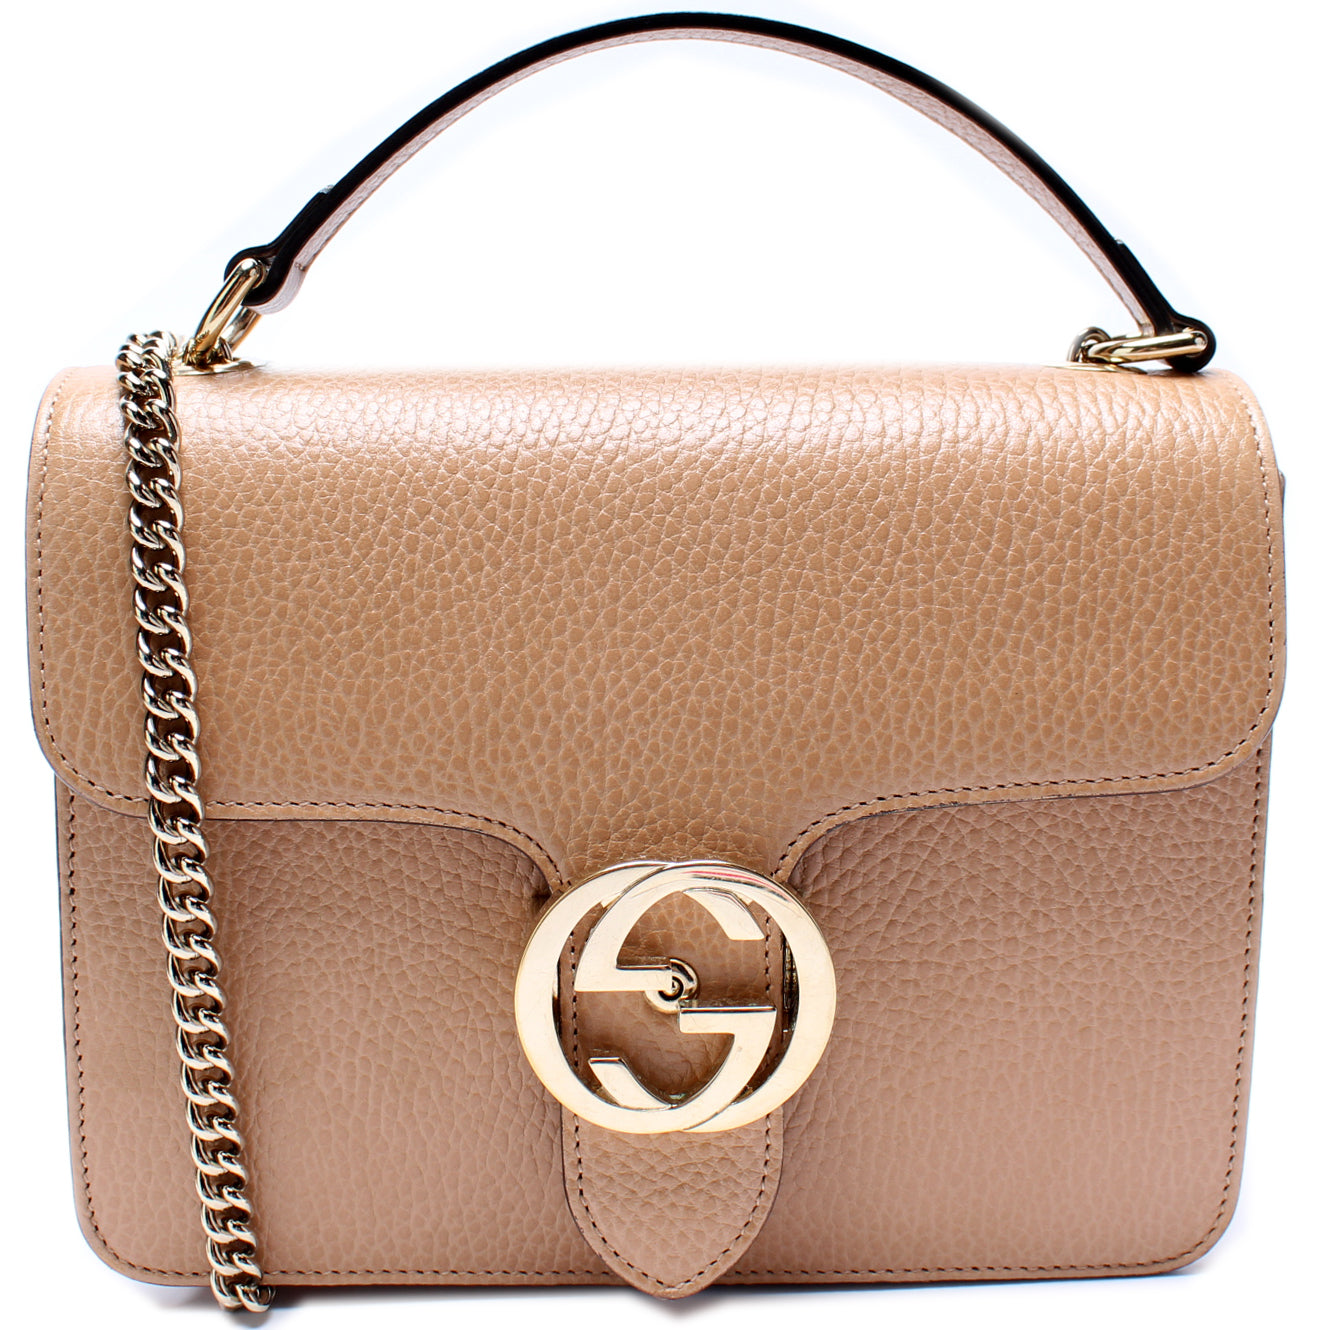 Gucci Interlocking GG Small Crossbody Bag-Cream leather- New